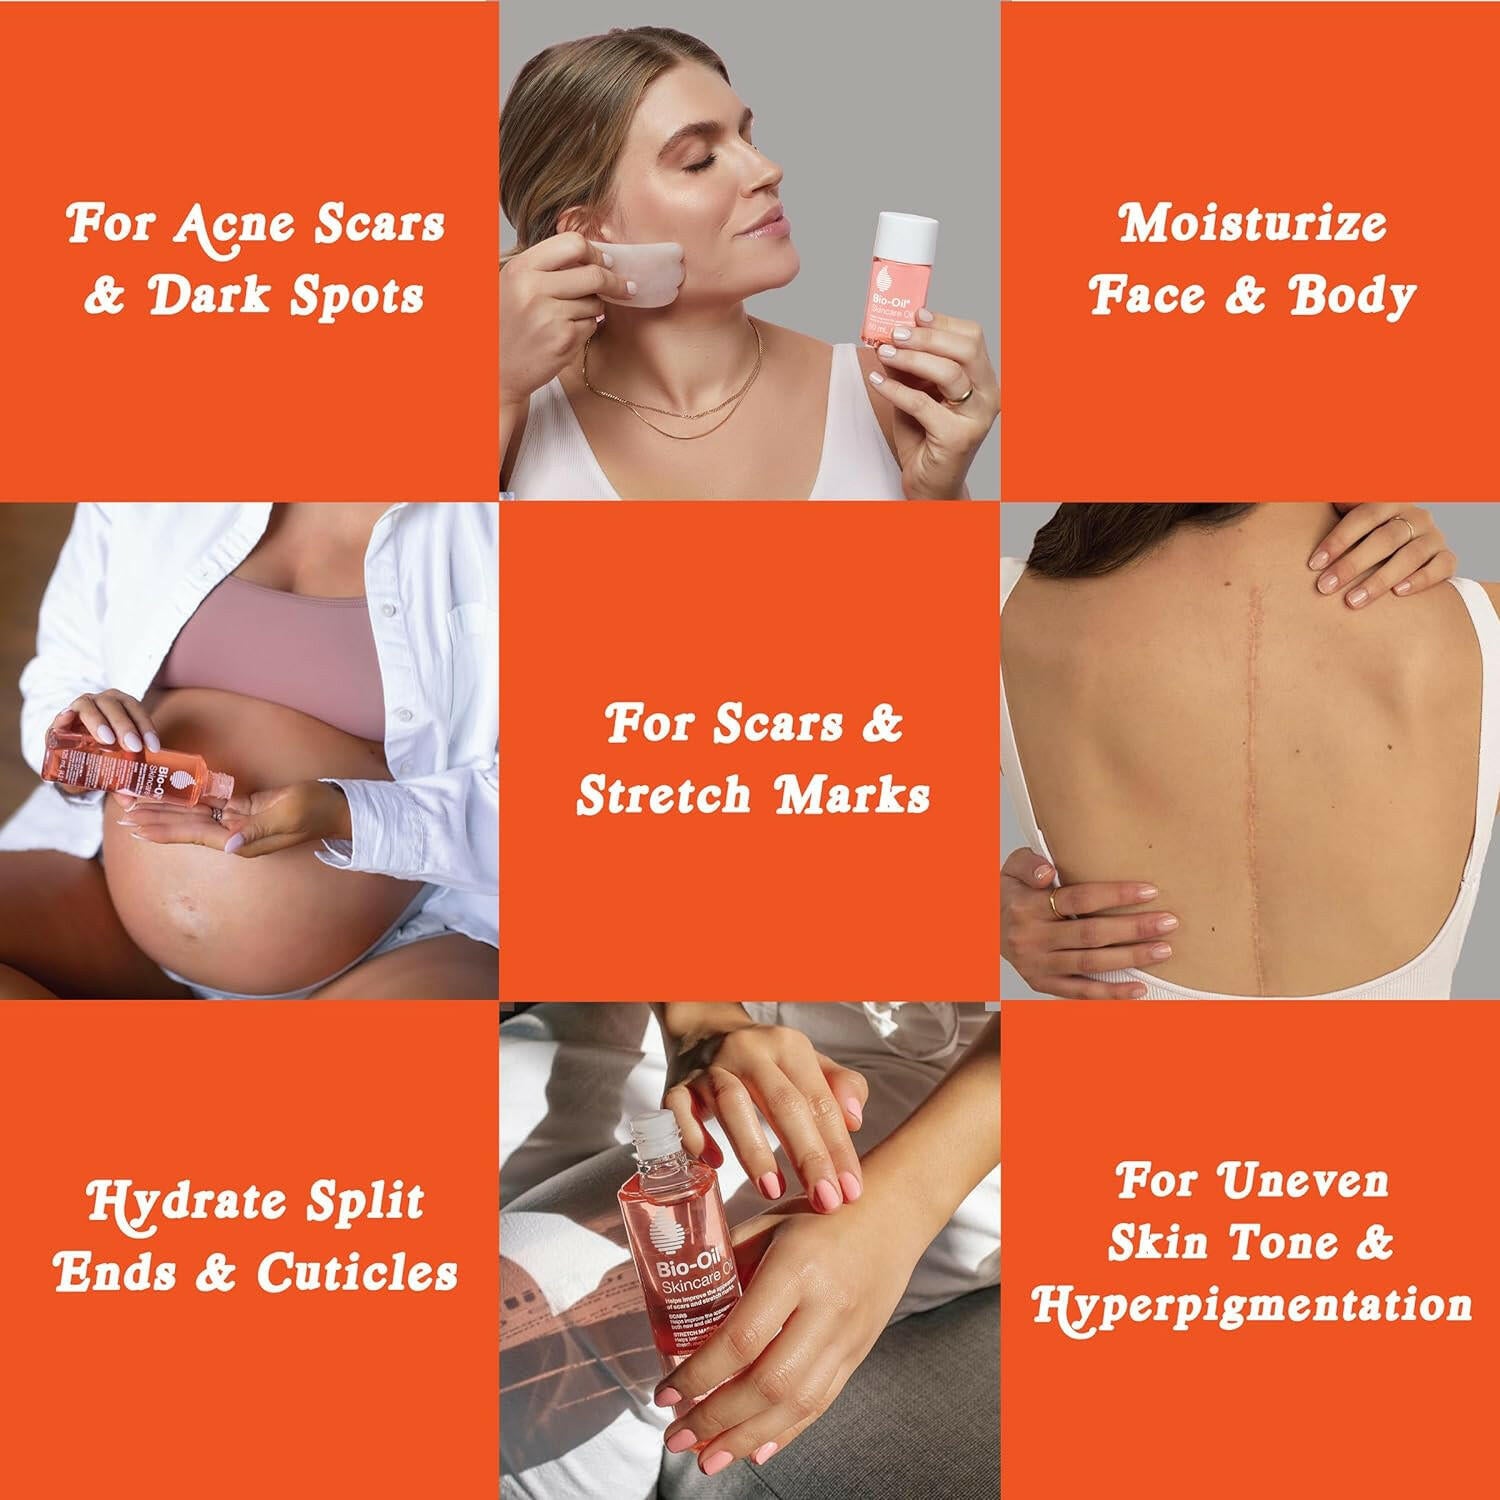 Bio-Oil Skincare Body Oil, Vitamin E, Serum for Scars & Stretchmarks, Face & Body Moisturizer